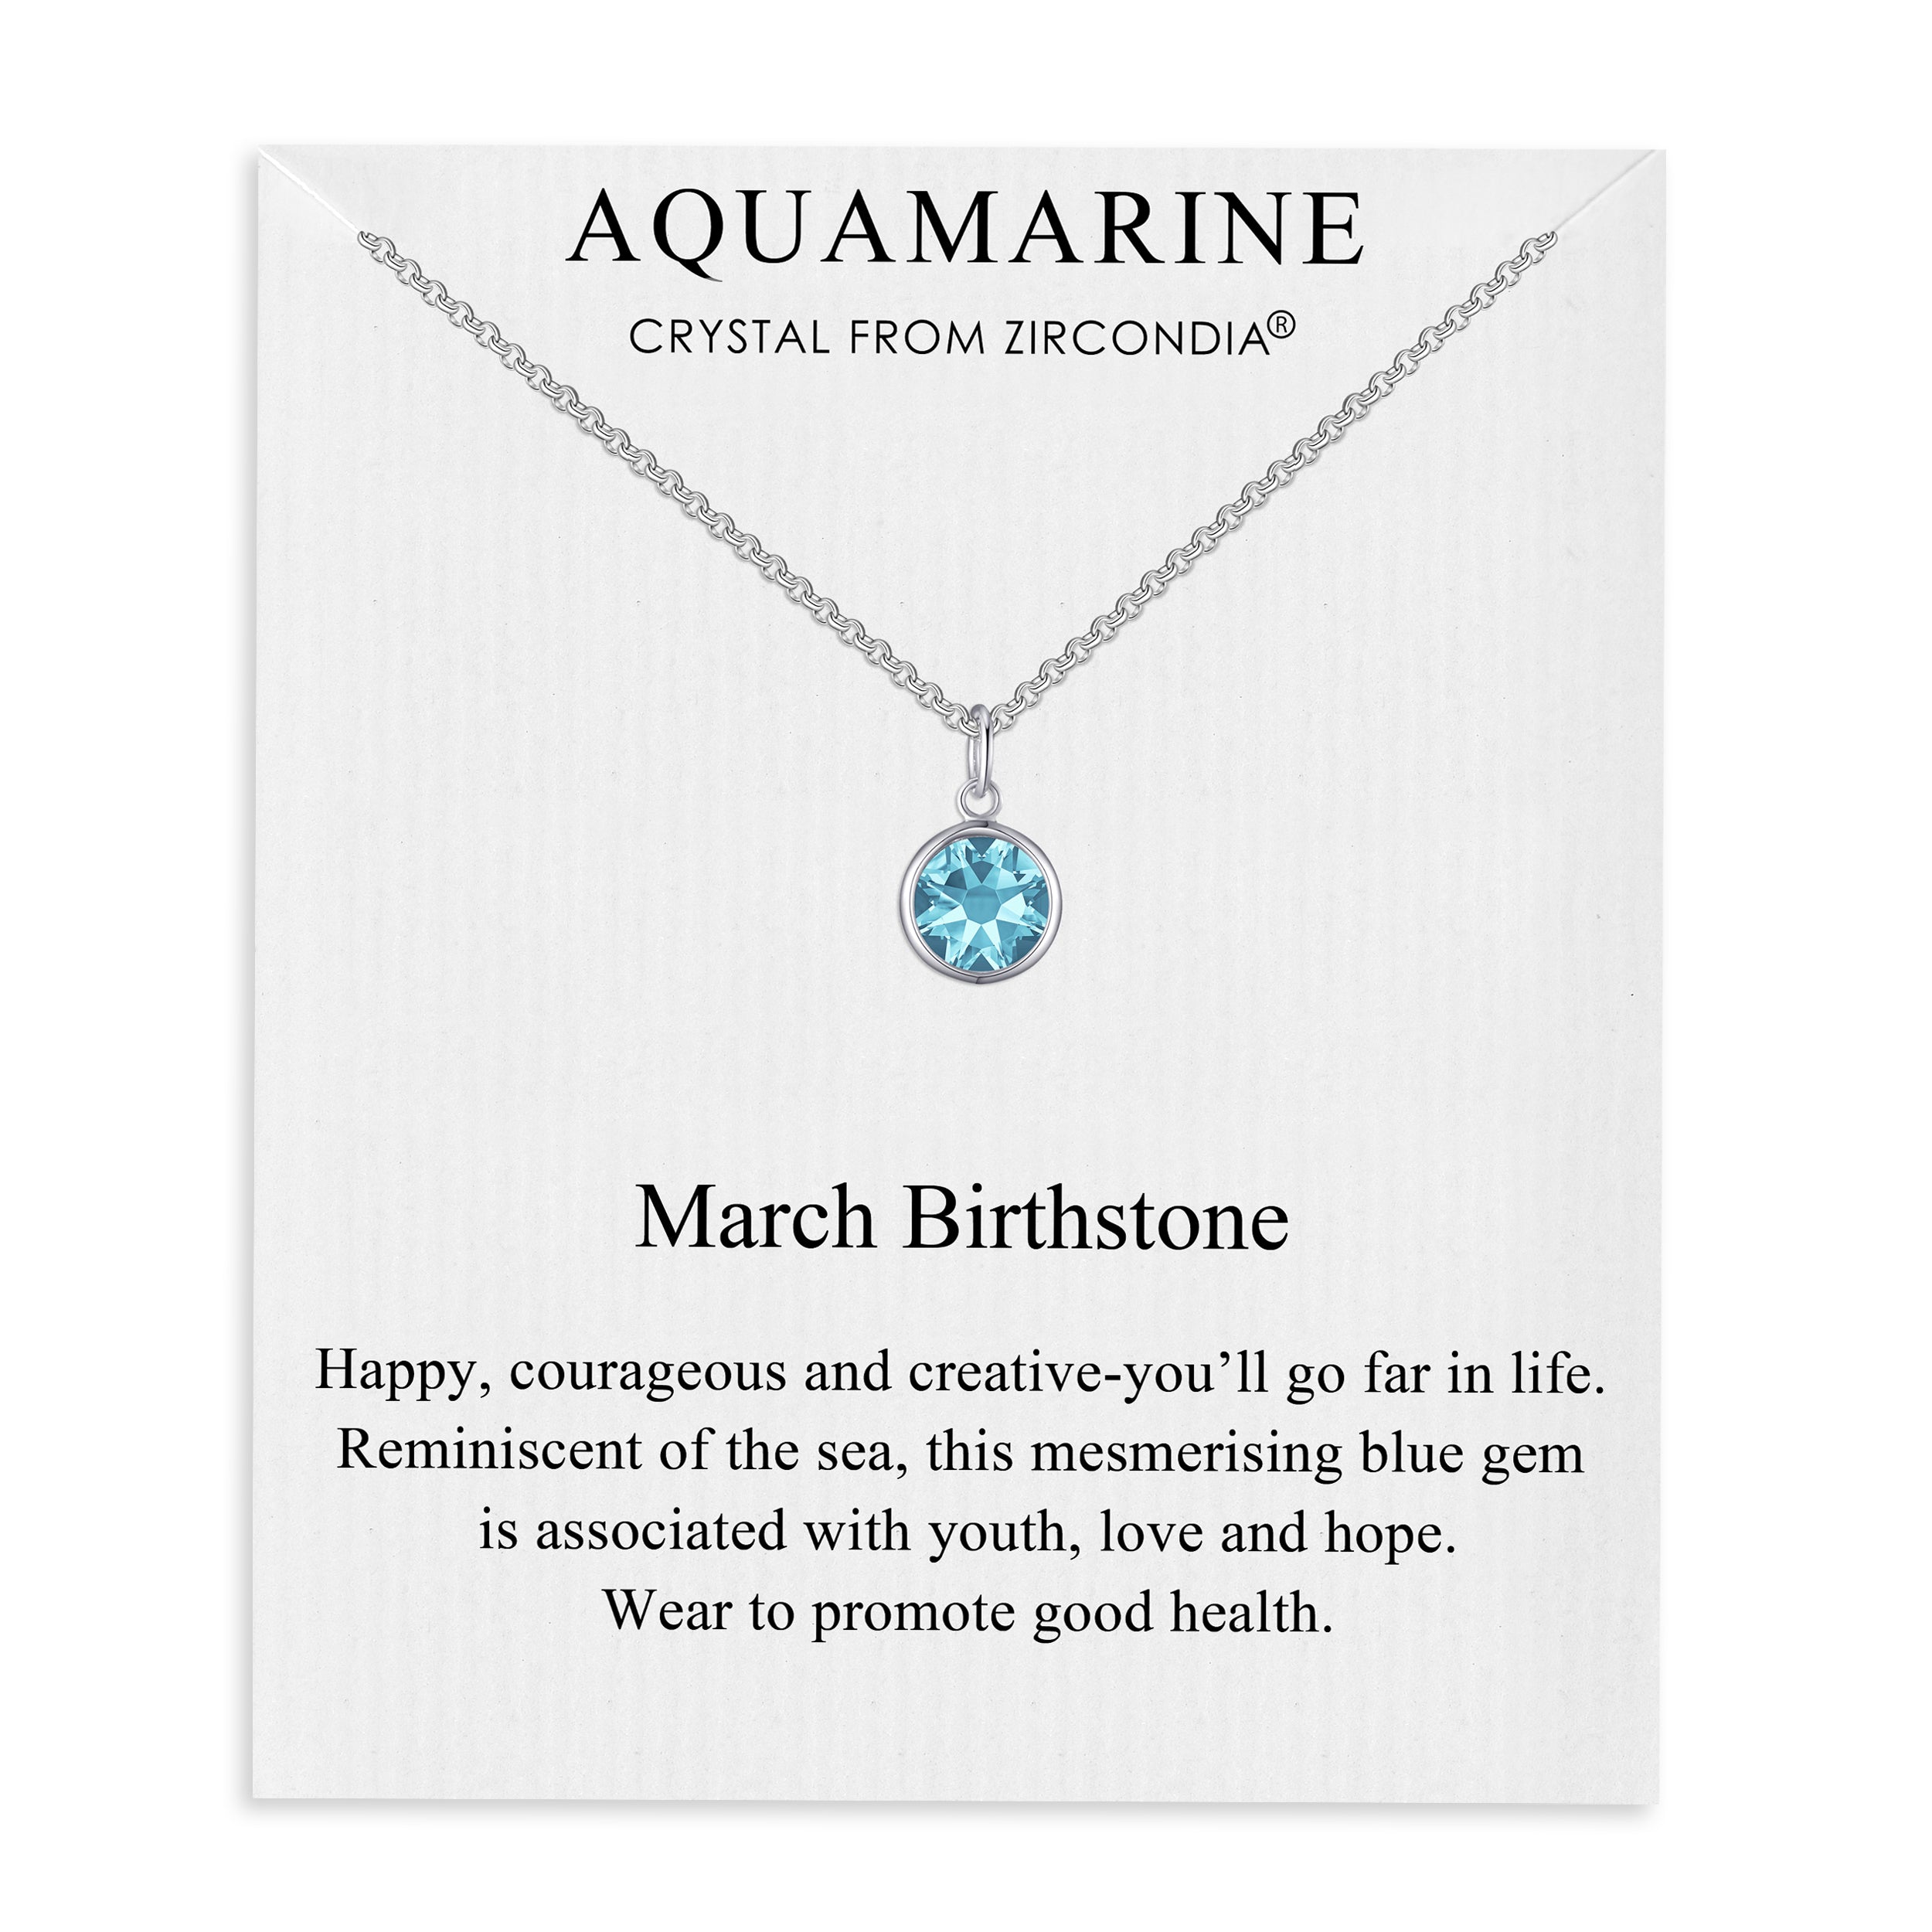 March (Aquamarine) Birthstone Necklace Created with Zircondia® Crystals by Philip Jones Jewellery